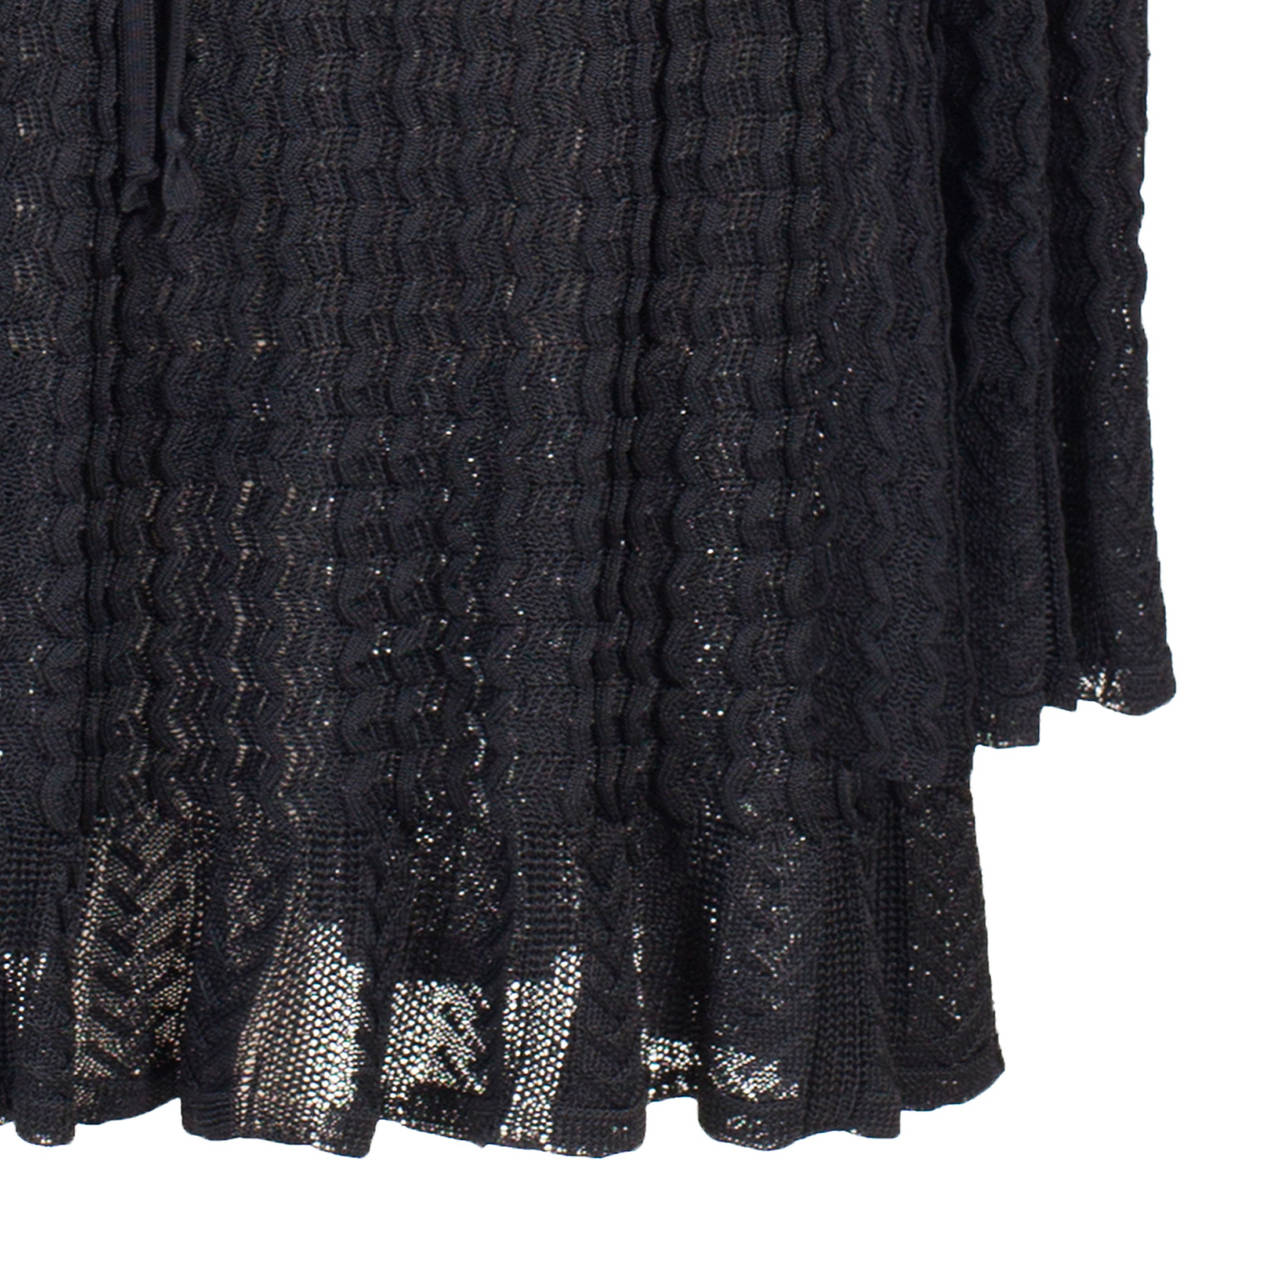 Alaia Black Knit Top Dress 1992 For Sale 1